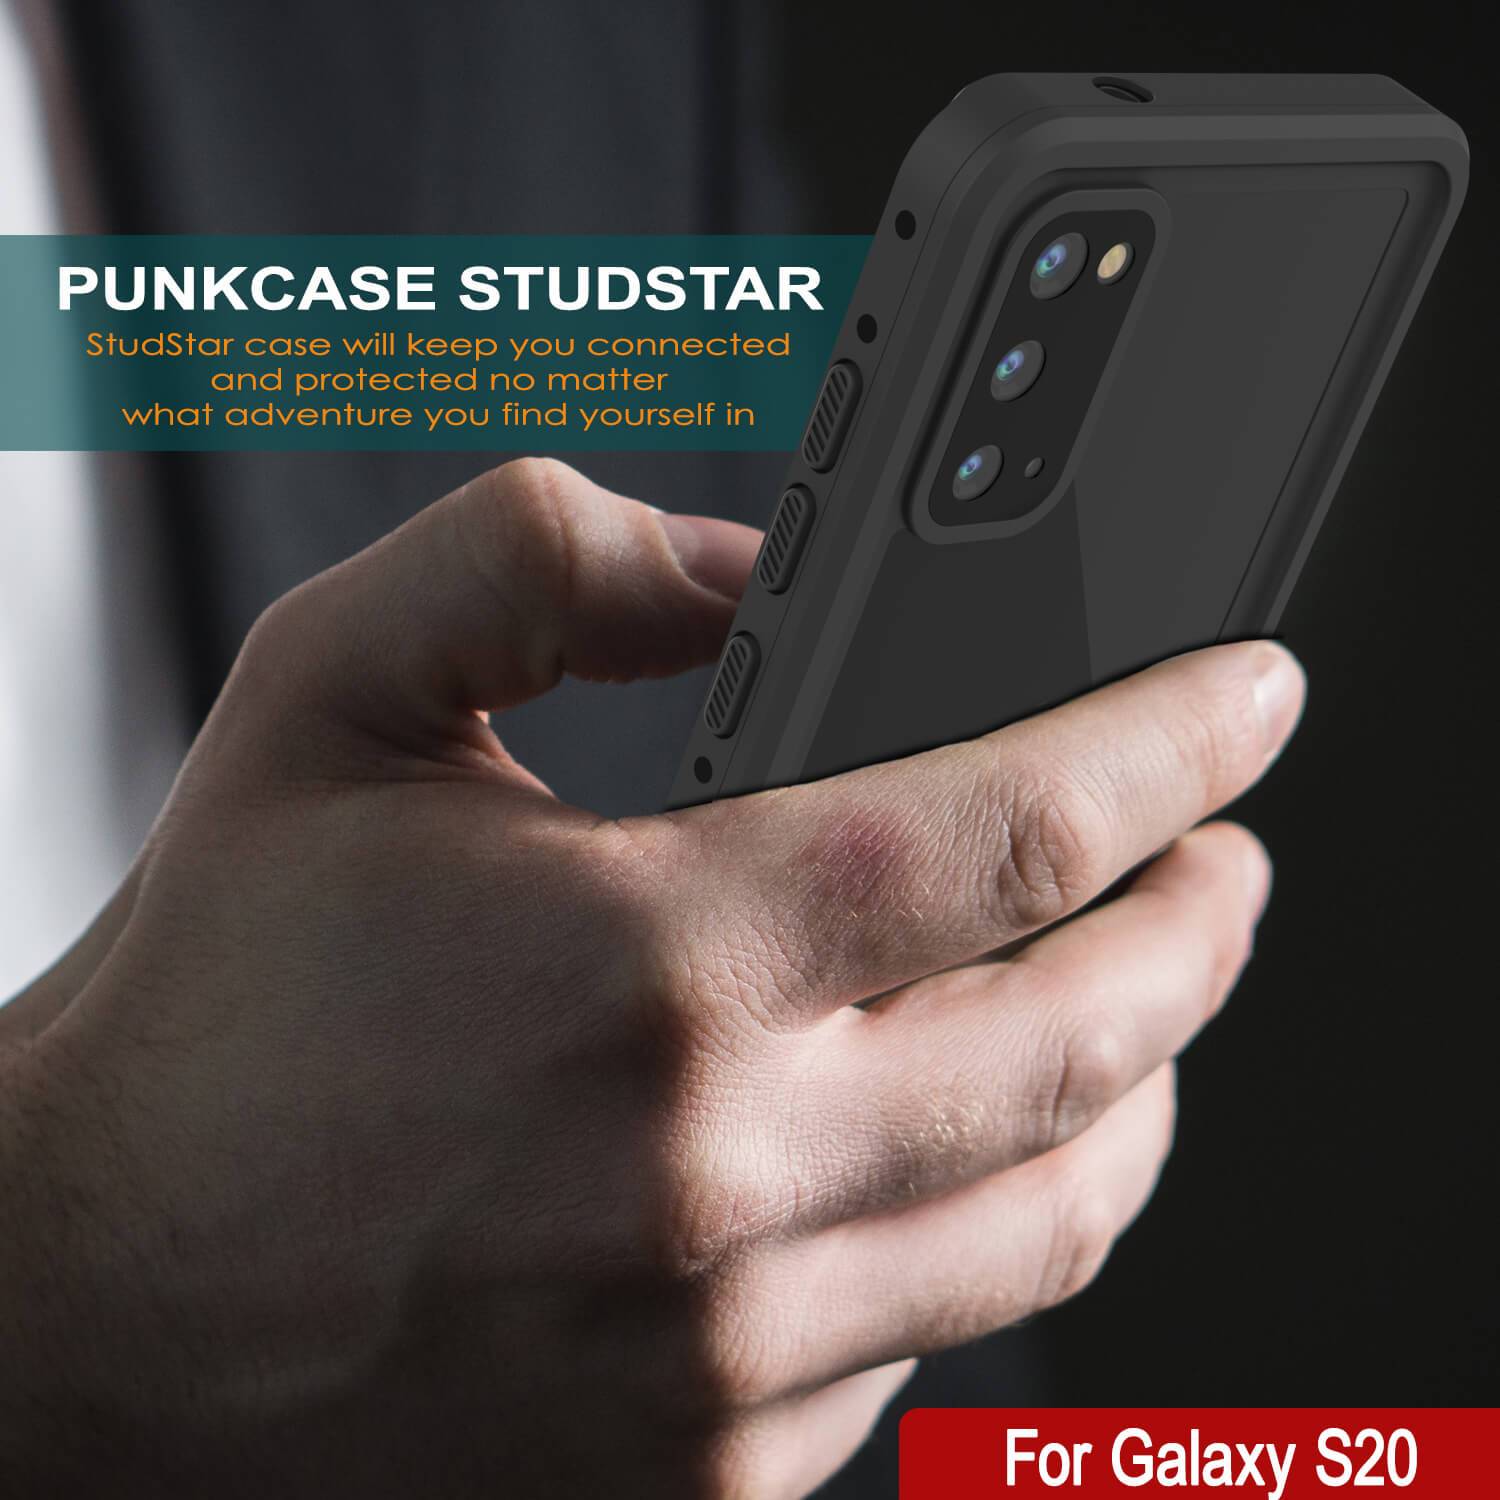 Galaxy S20 Waterproof Case PunkCase StudStar Black Thin 6.6ft Underwater IP68 Shock/Snow Proof